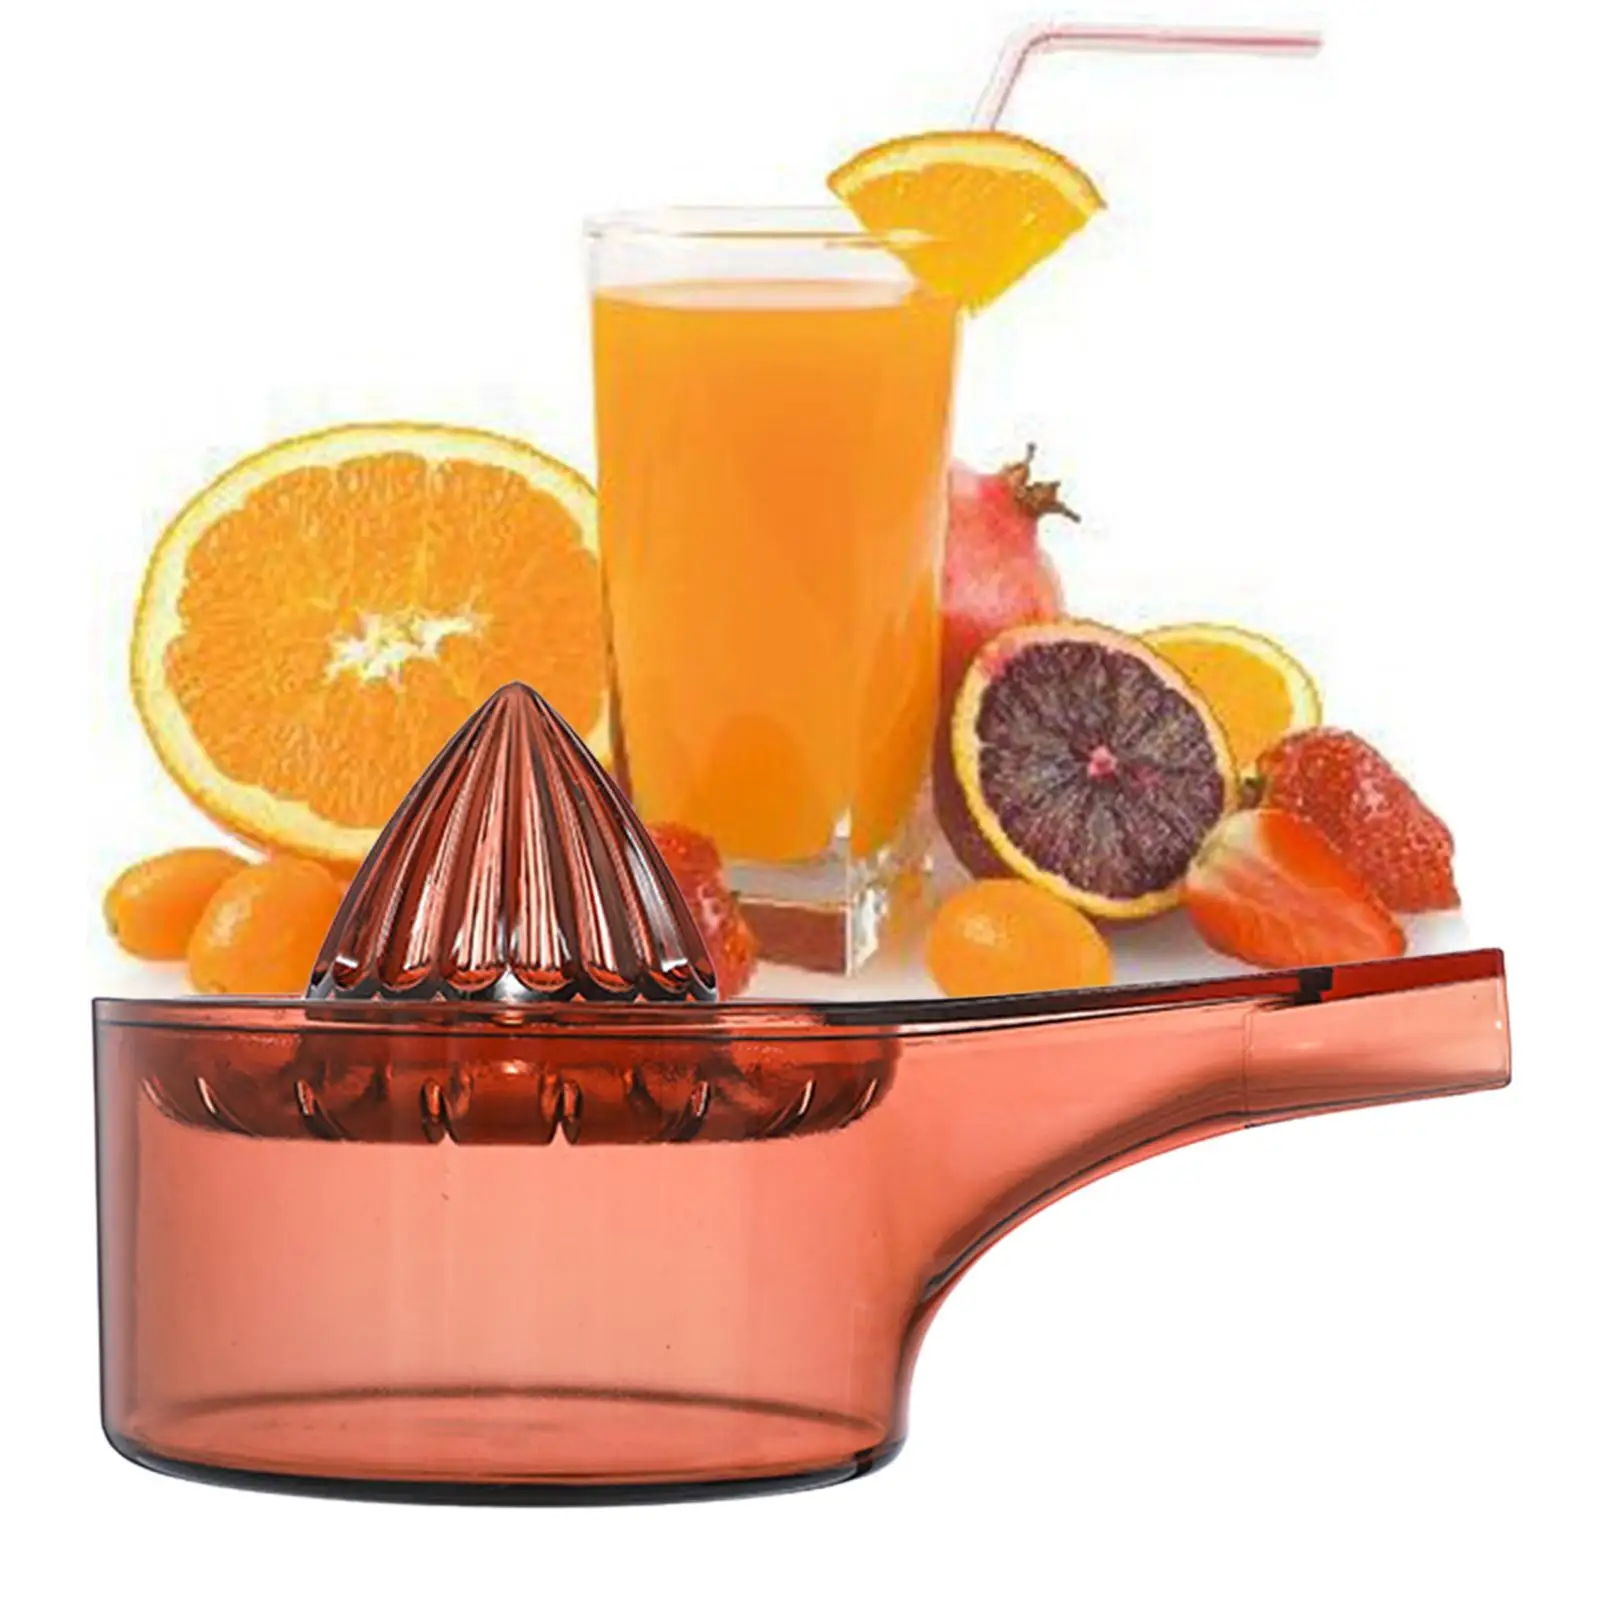 Citrus Manual Juicer Lemon Orange Lime Juicer 21Cmx12cm , 12 Tooth Reamer to Extract Maximum Juice Transparent Body Easy Clean